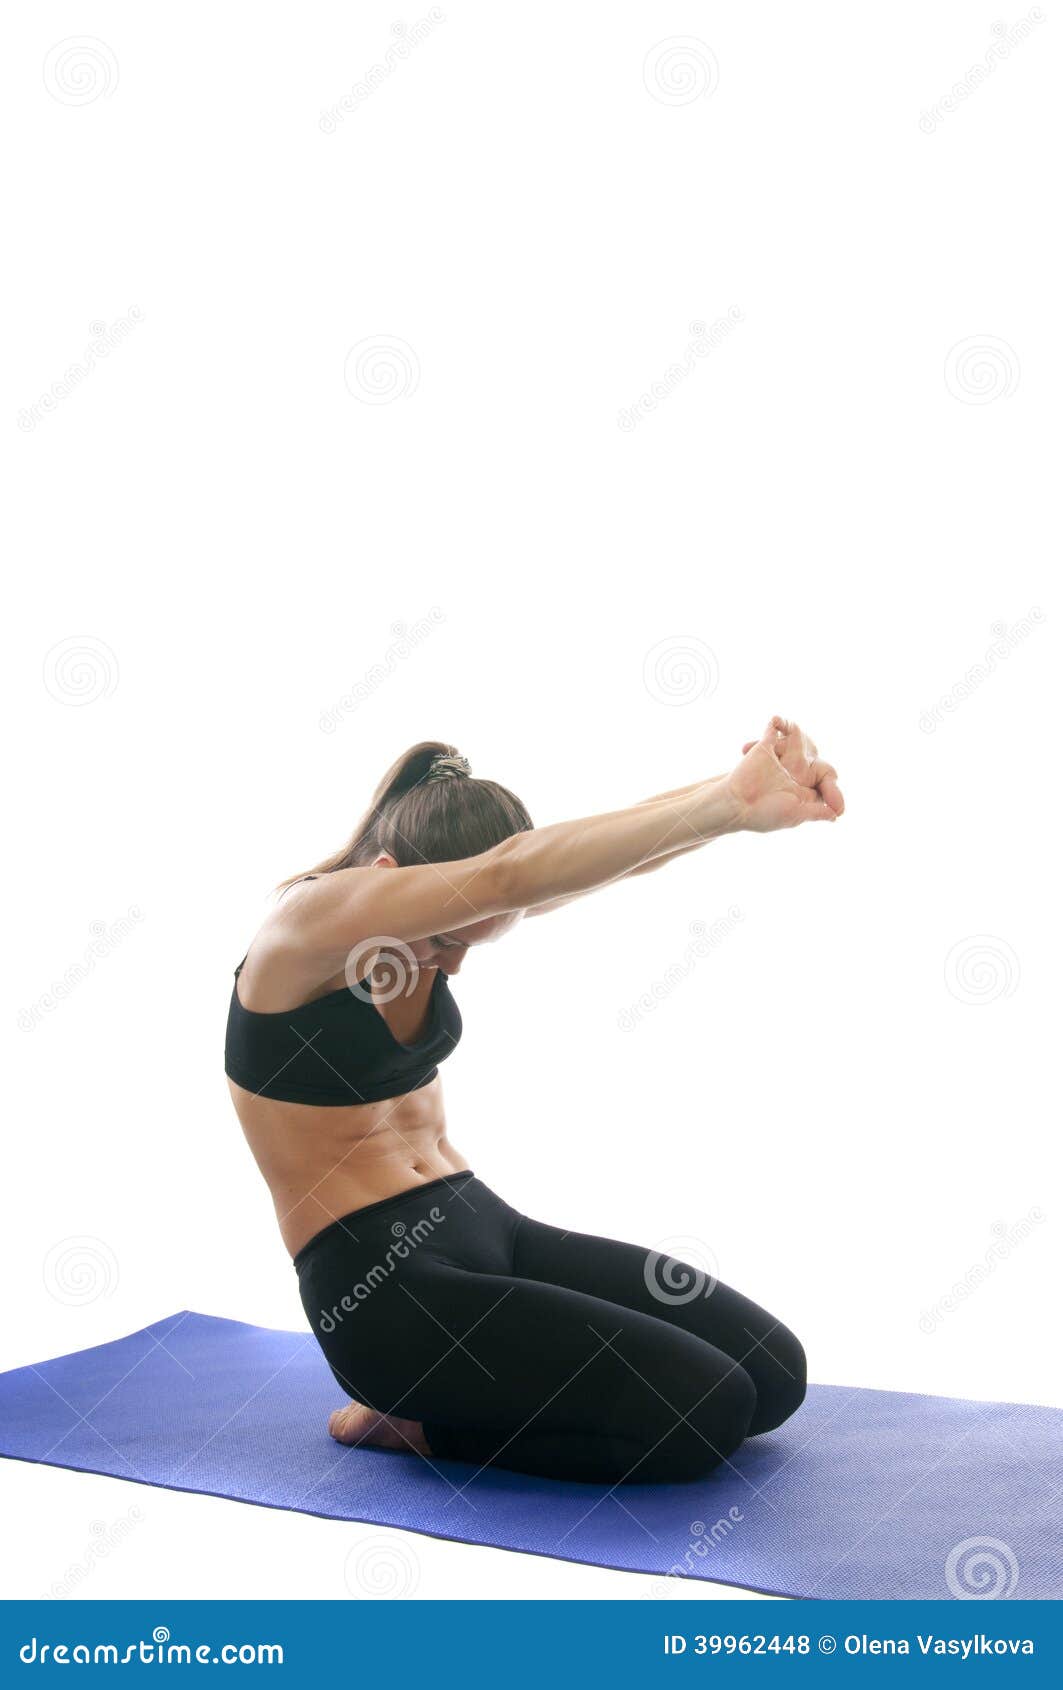 Vajrasana: How To do, Benefits, Precautions | Basic yoga poses, Learn yoga  poses, Pranayama yoga